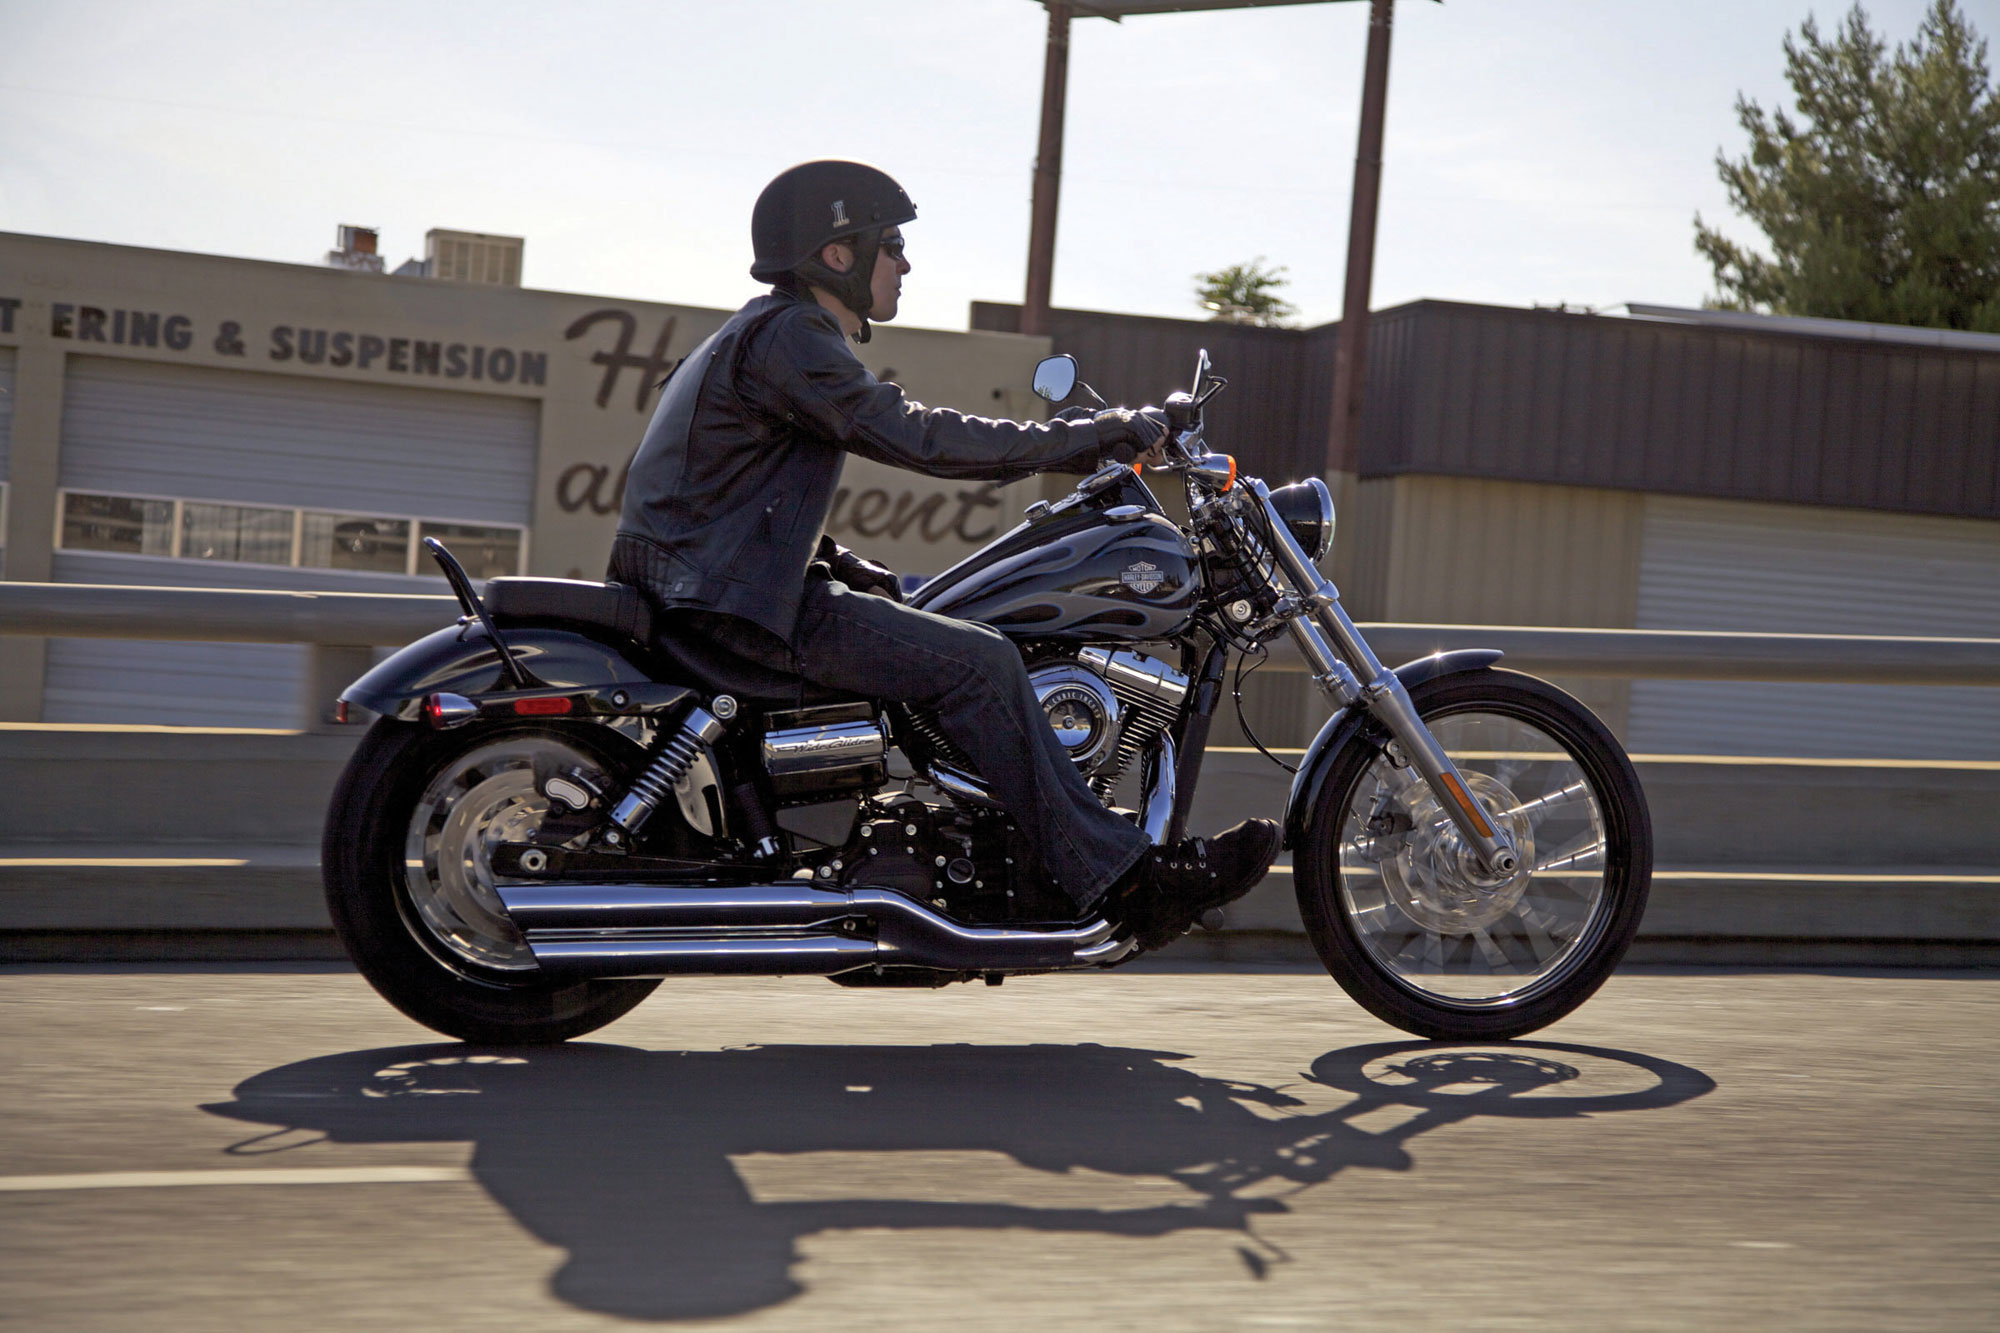 2013 Harley Davidson Fxdwg Dyna Wide Glide Review